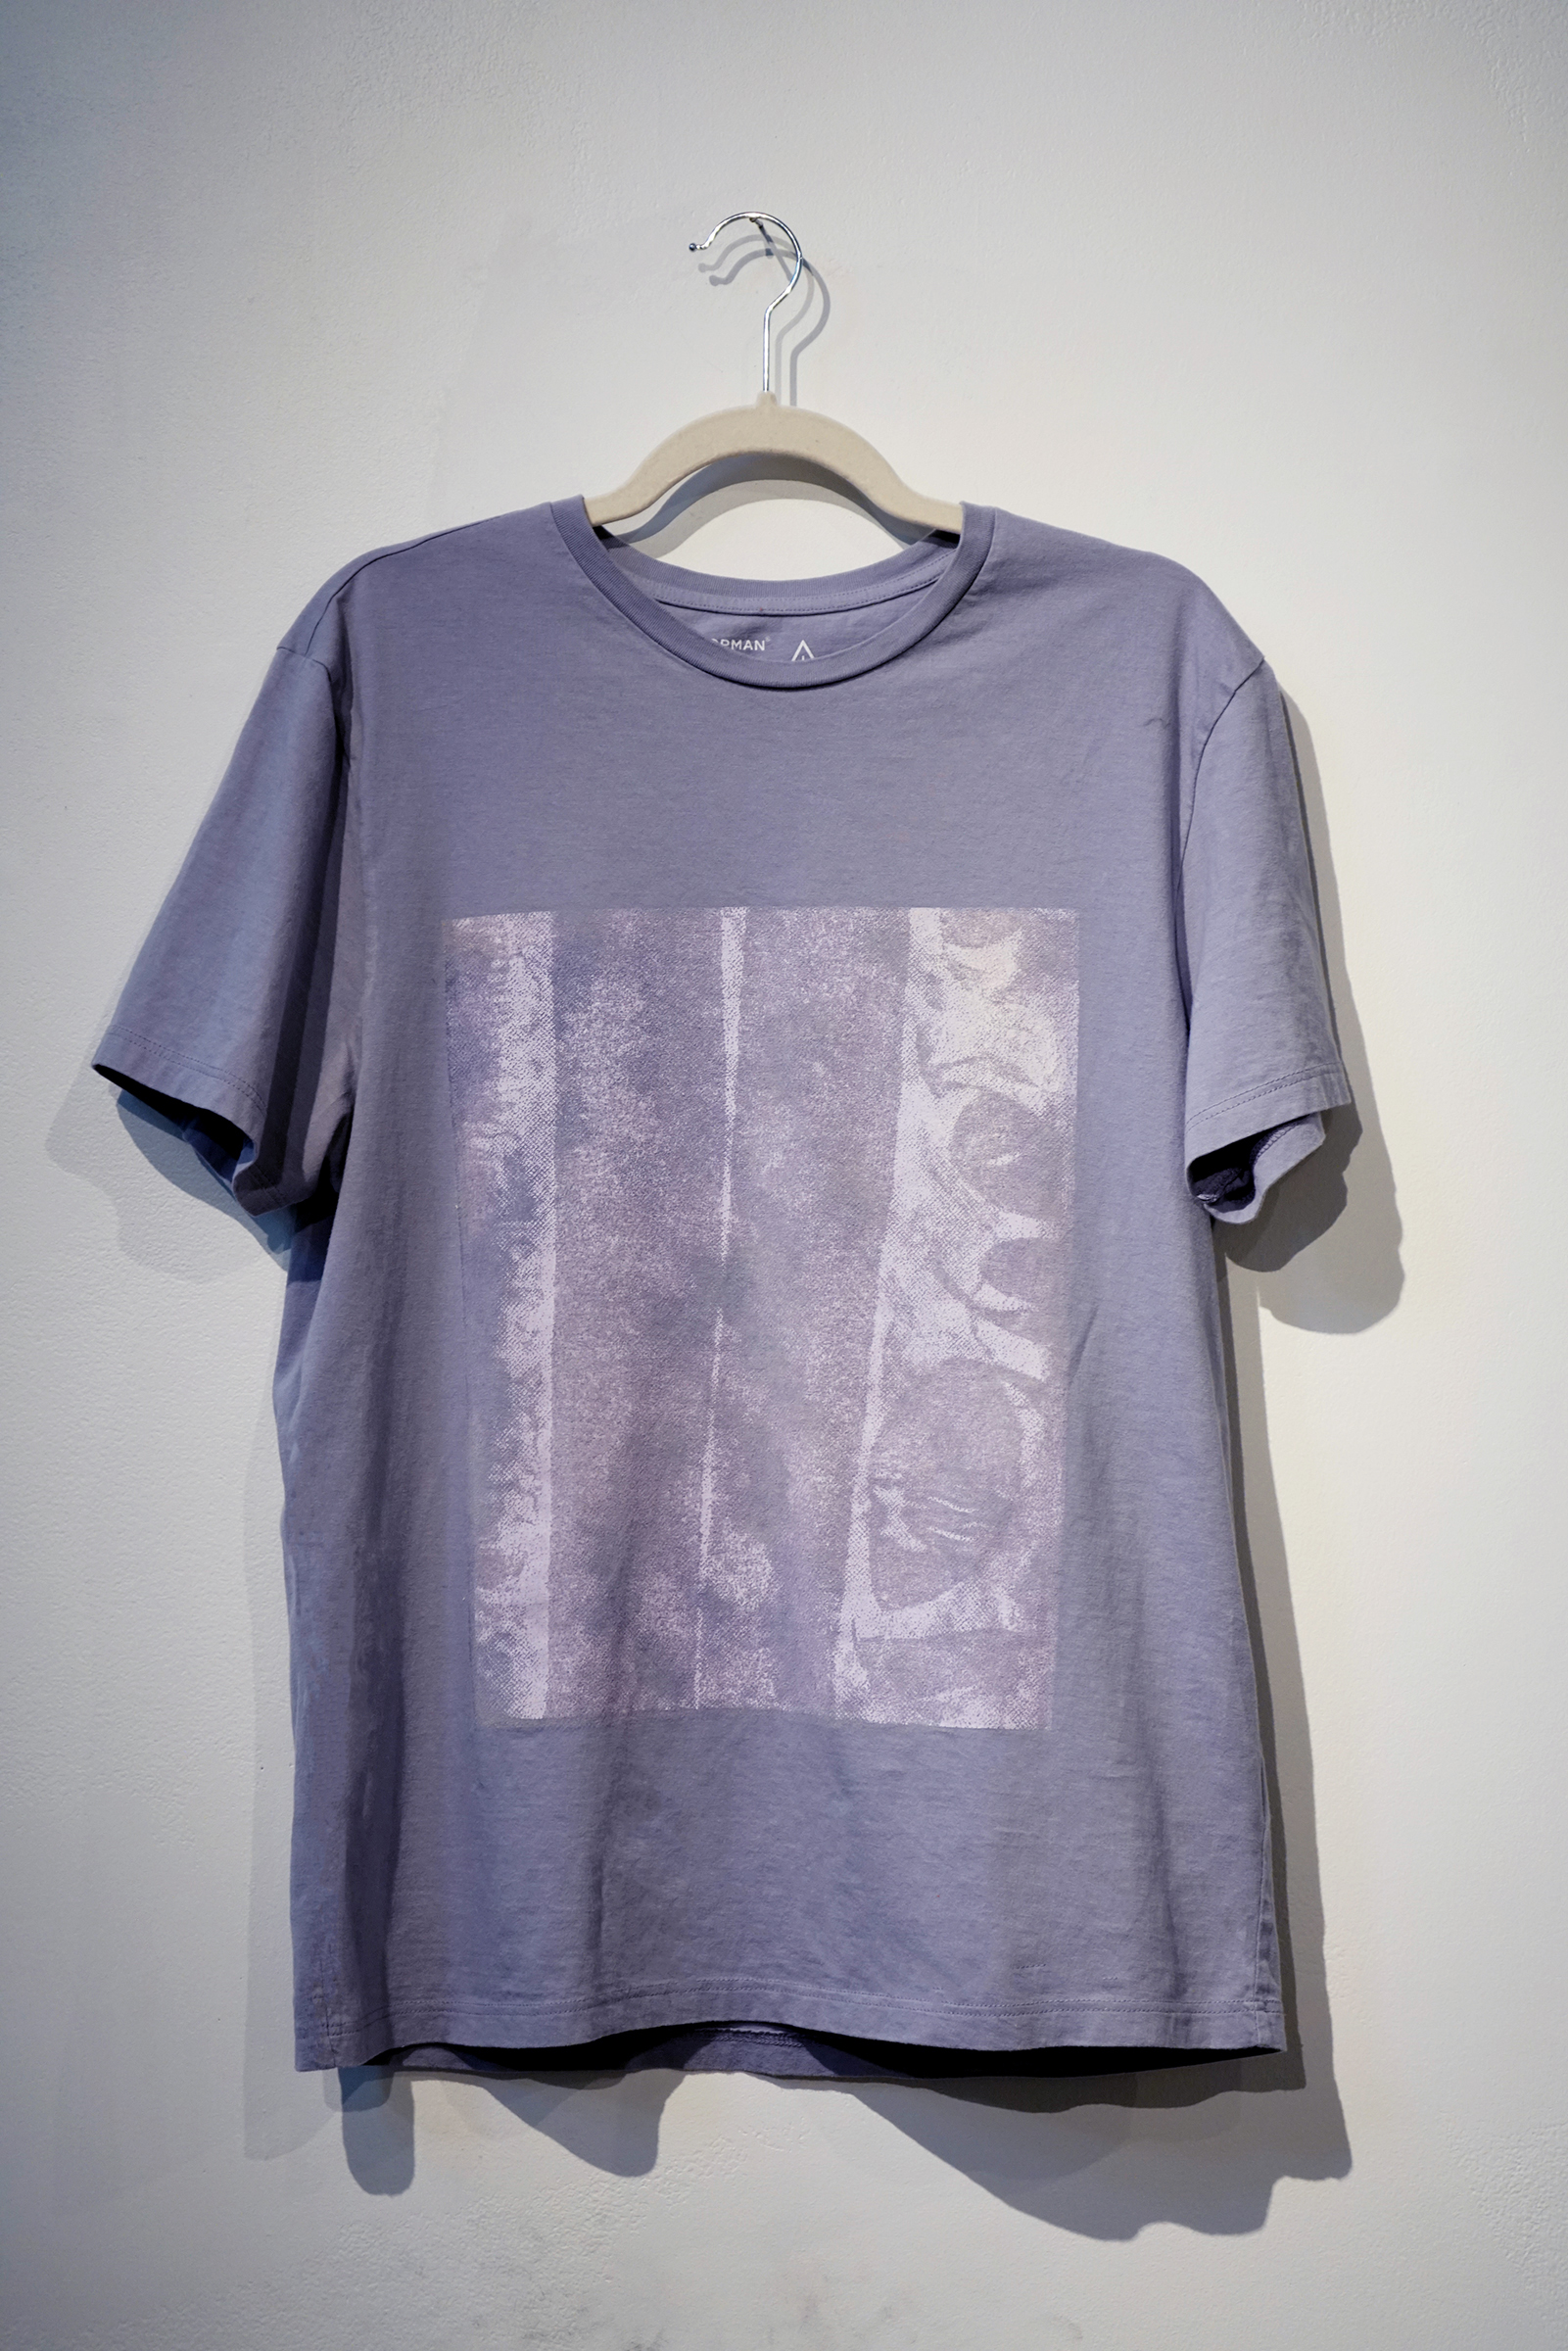 Shirt 4, screenprint on upcycled clothing by Rachel Carboni.